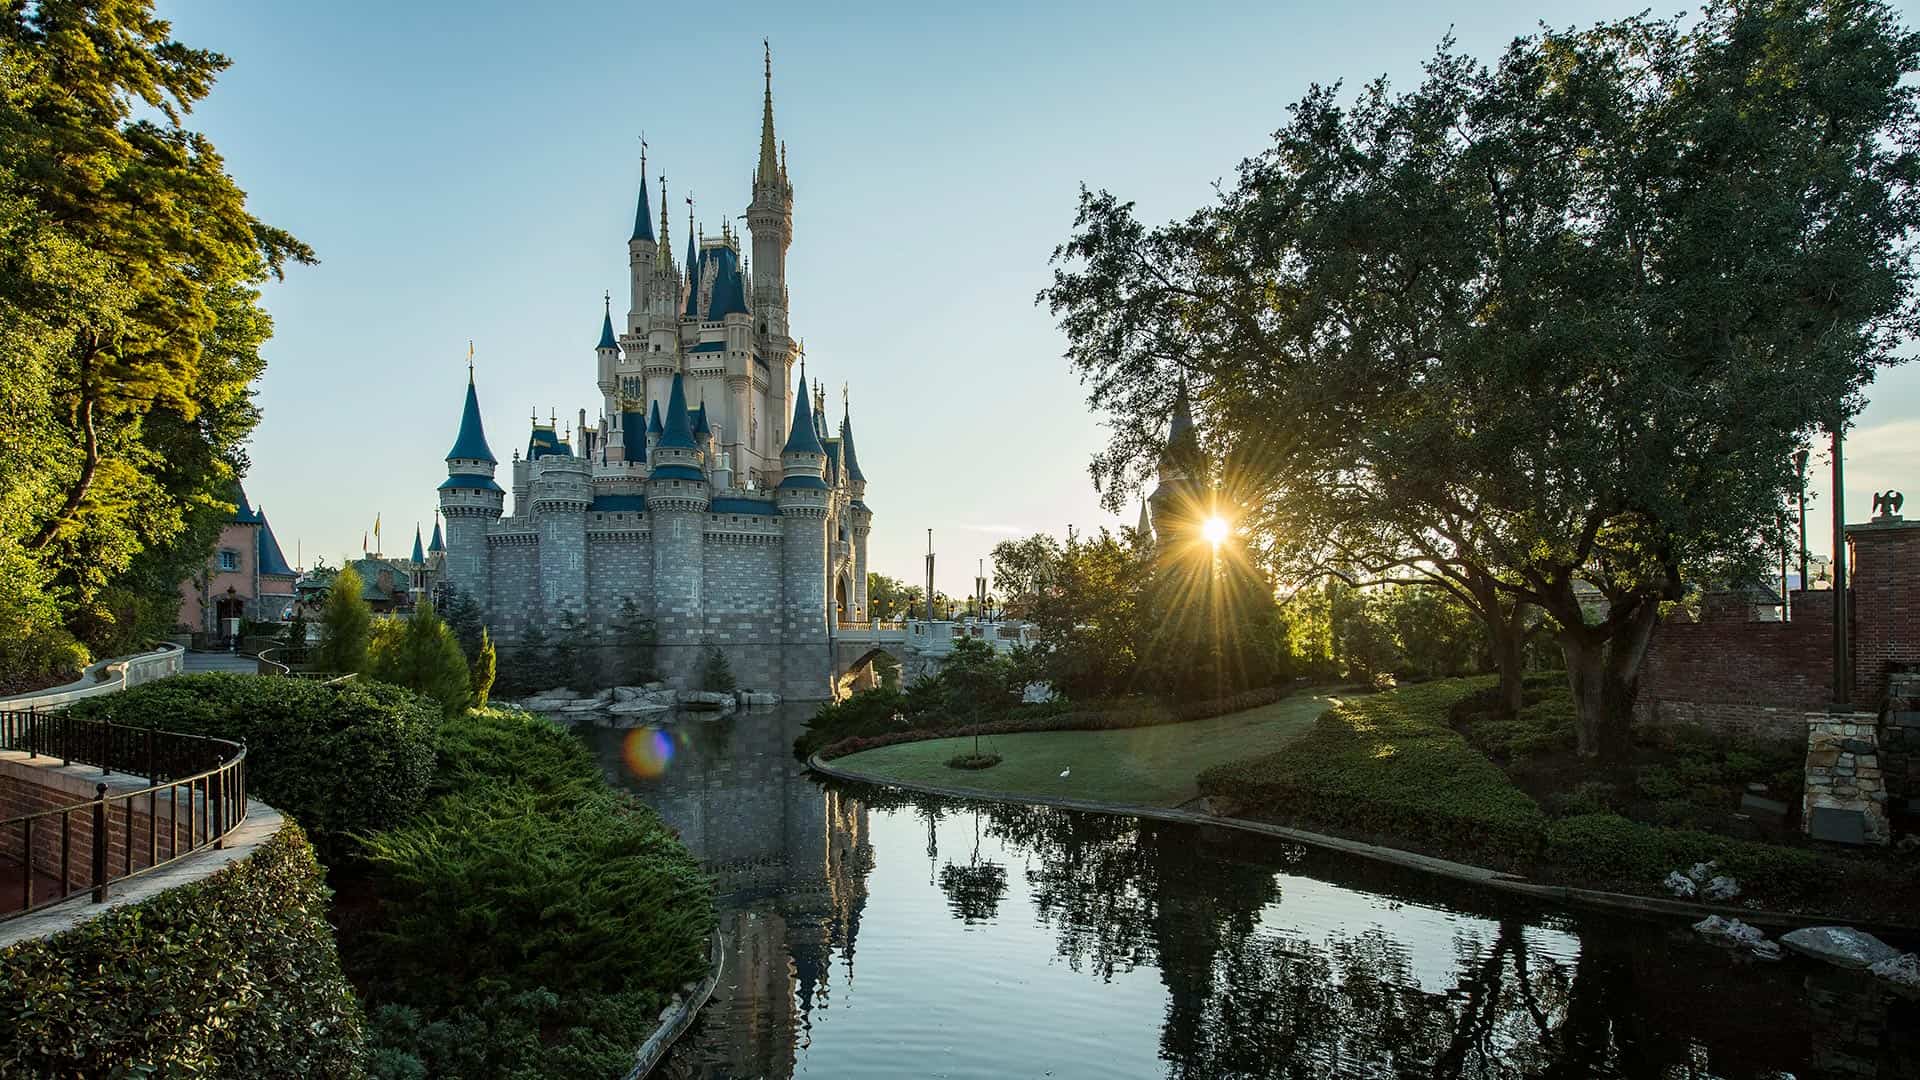 Cinderella Castle at Walt Disney World’s Magic Kingdom.